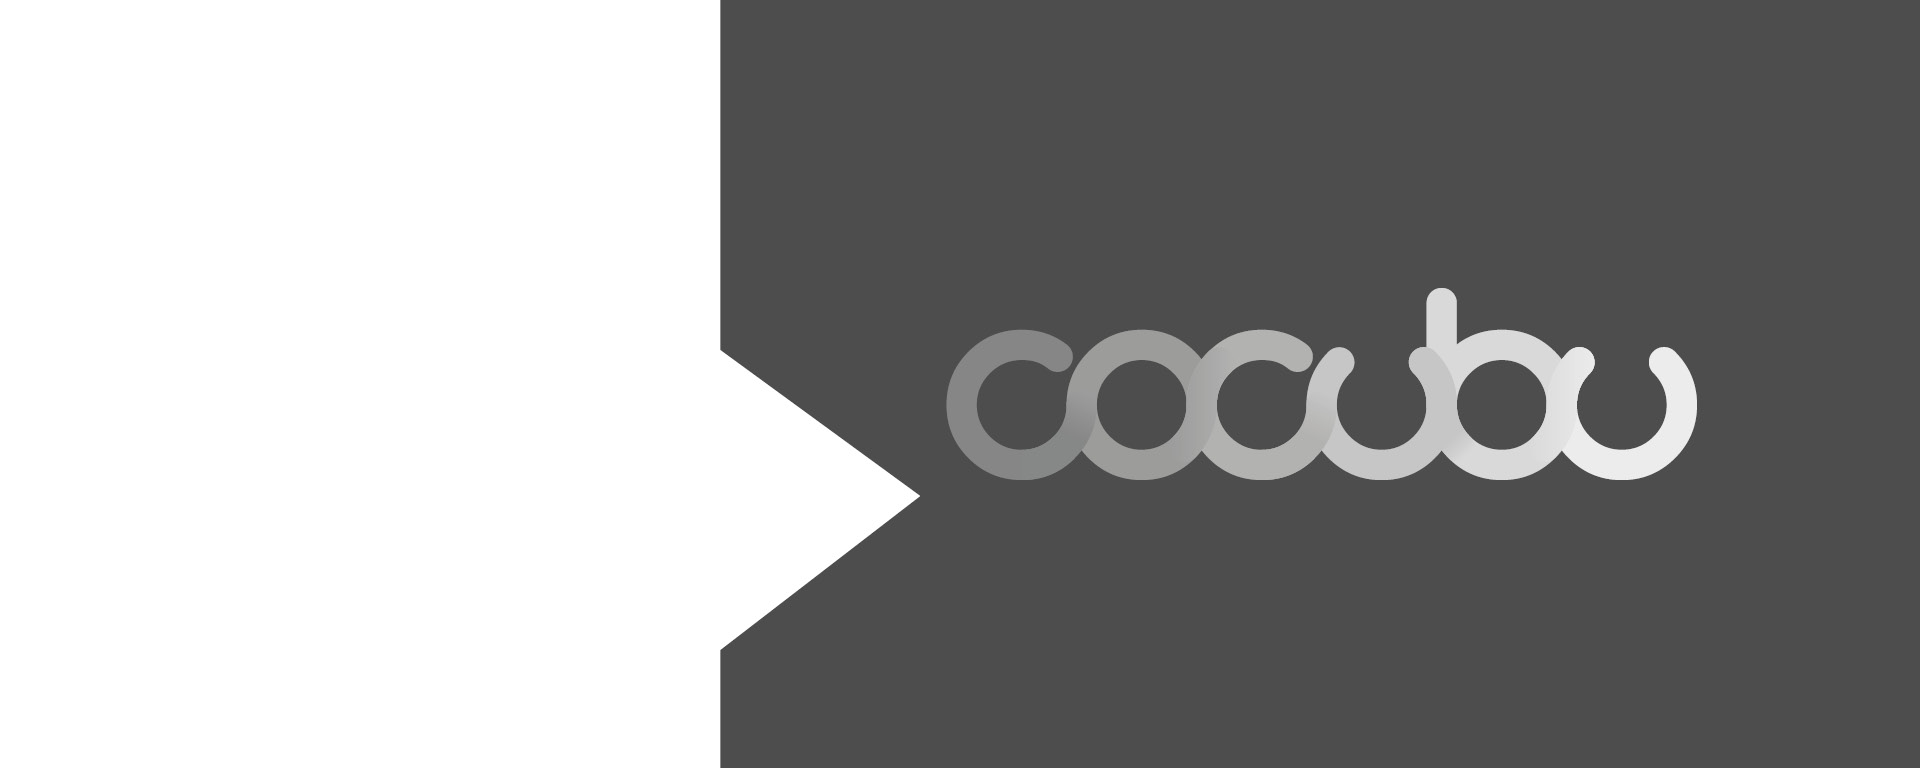 compound customer business Start Logo